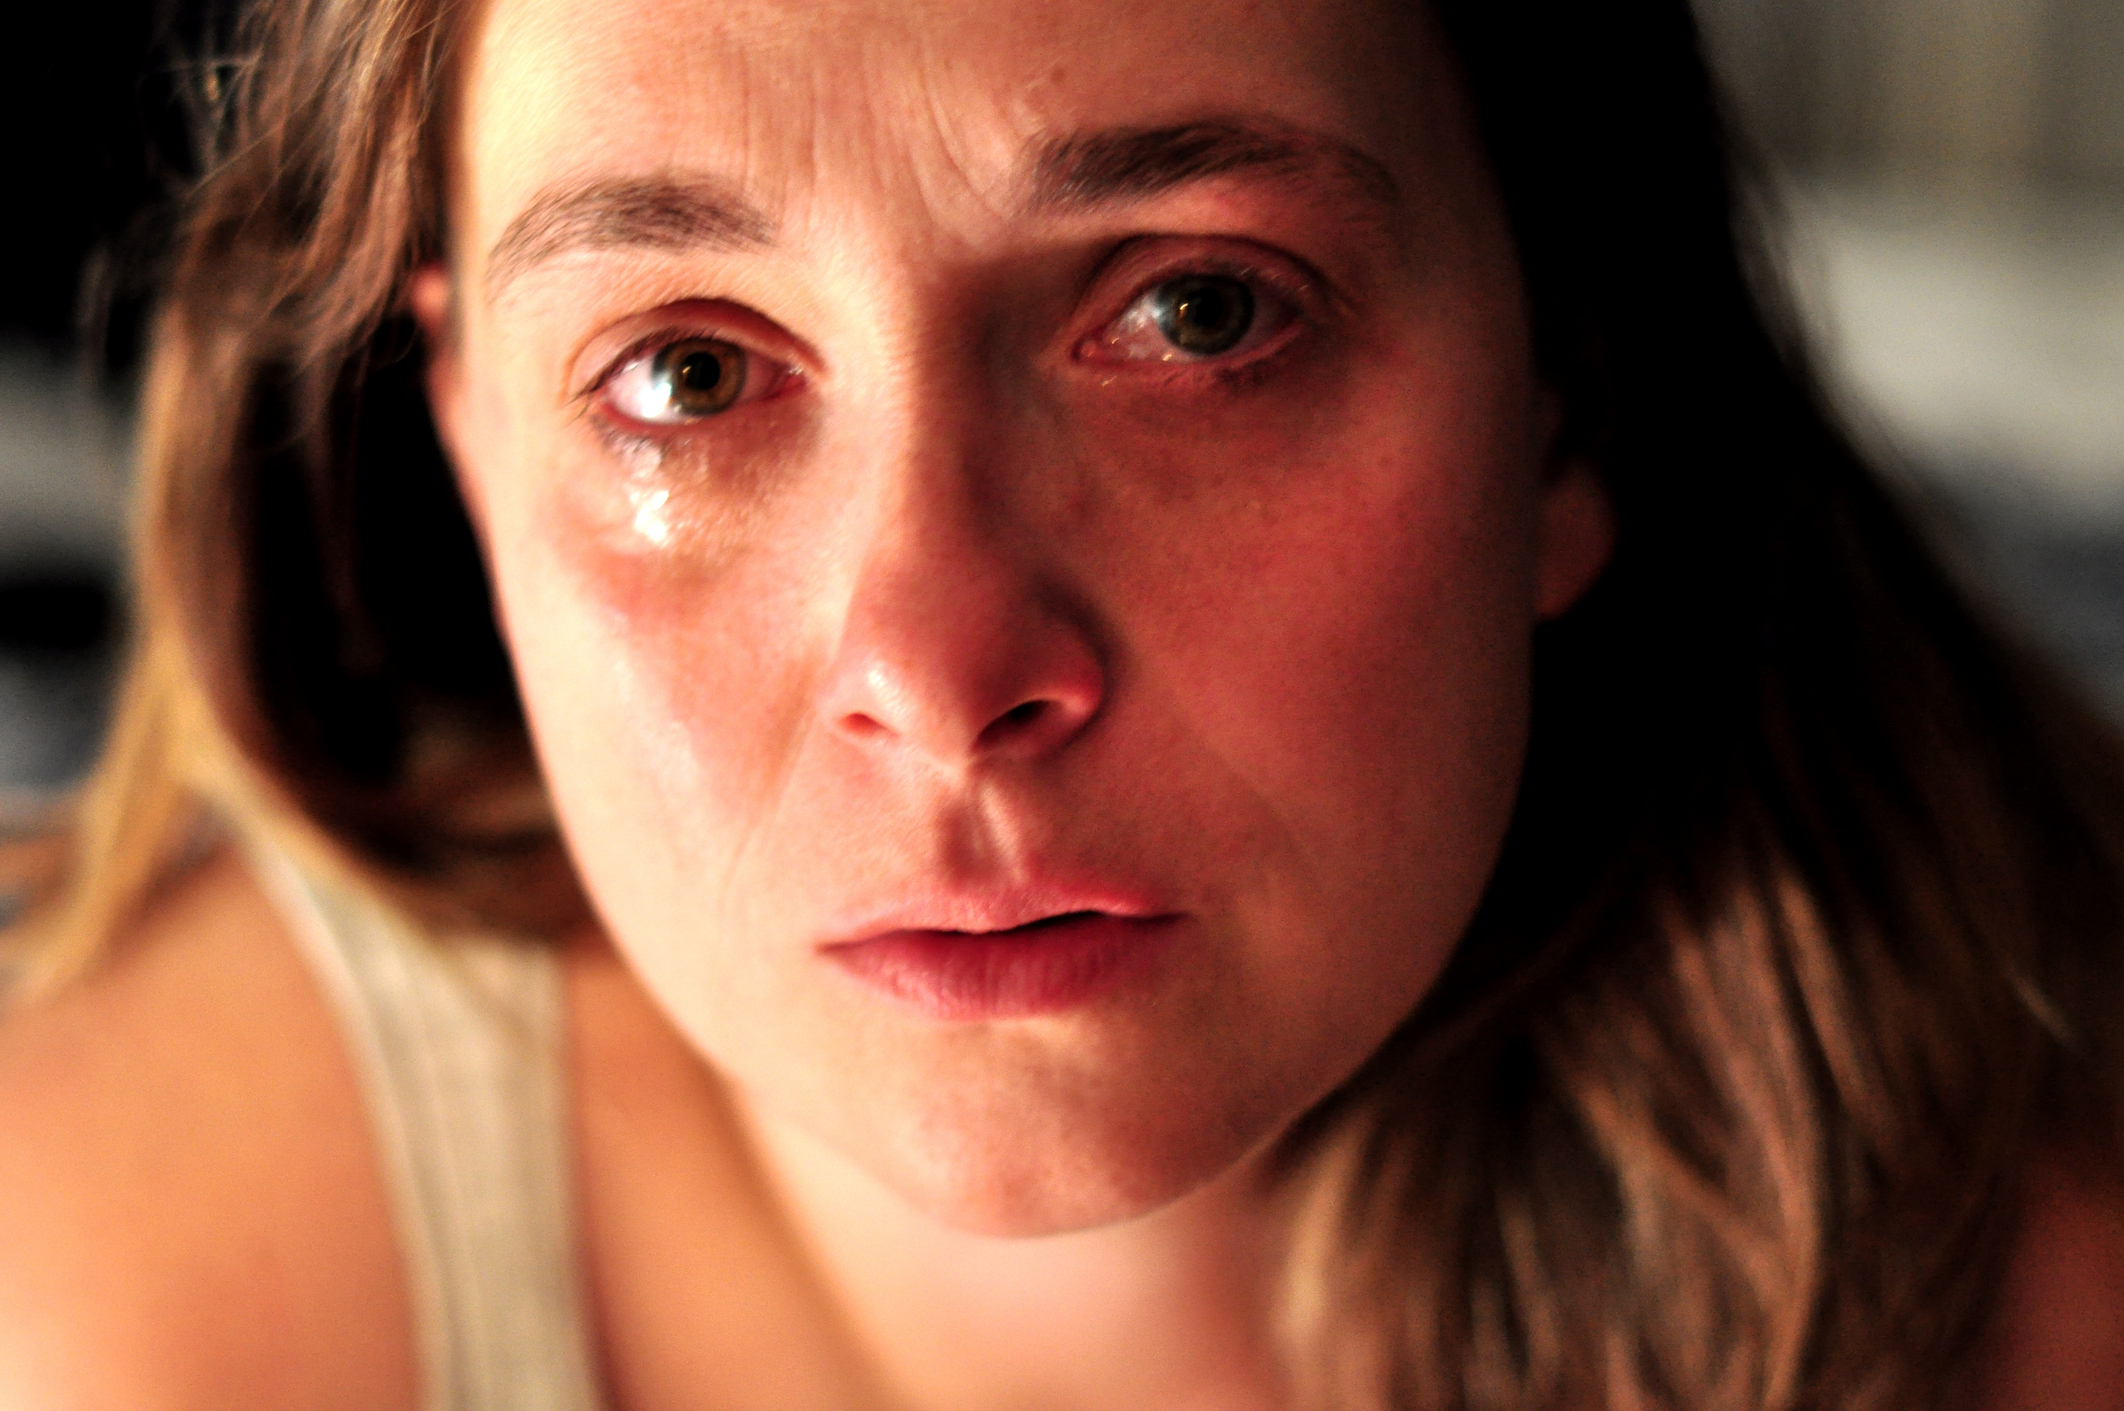 Closeup of a woman crying